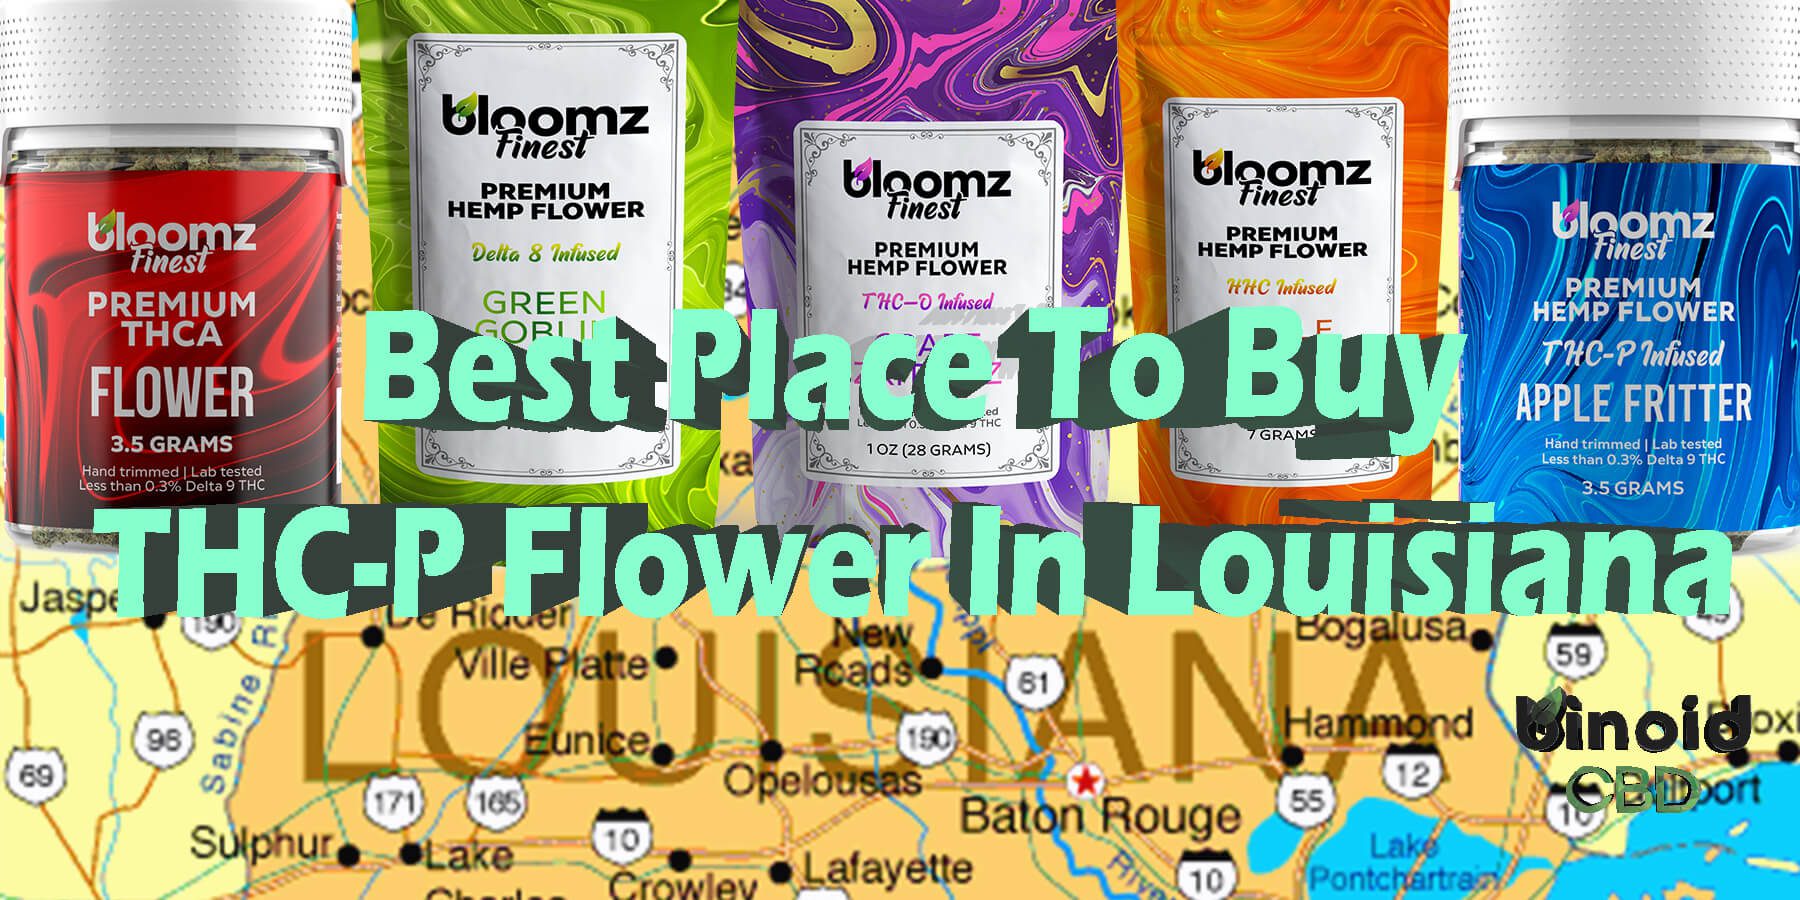 Buy THCP Flower Louisiana Get Online Near Me For Sale Best Brand Strongest Real Legal Store Shop Reddit